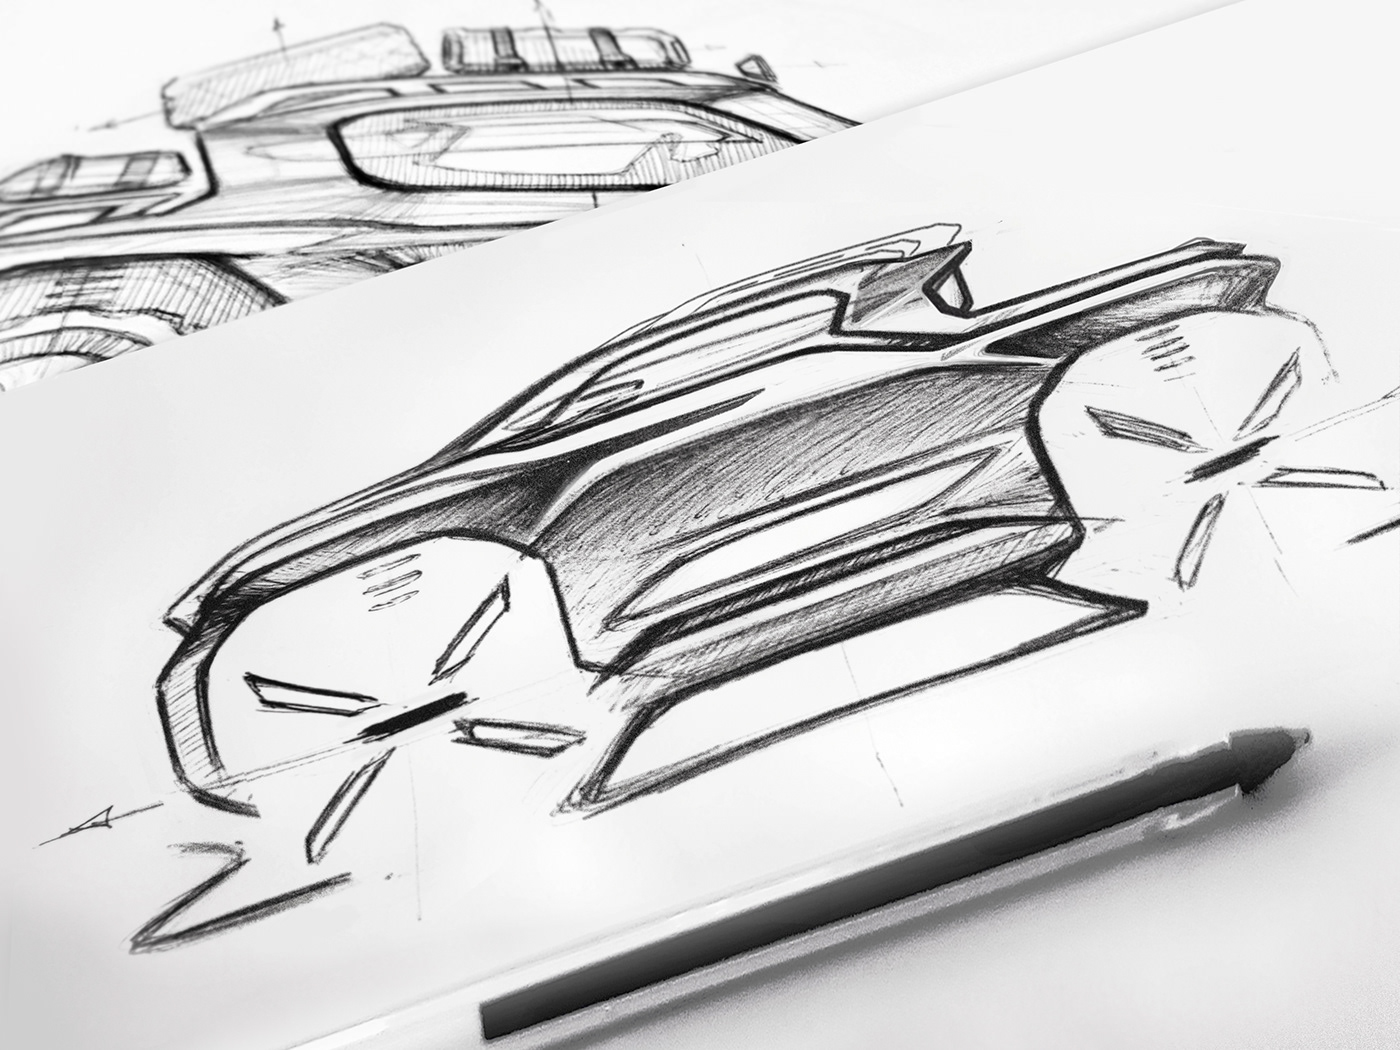 #rivian #pickup #truck #car #cardesign #automotive #industrialdesign #concept #sketch #drawing #rendering #photoshop #pen #electric #future #digitalart #digitalpaint